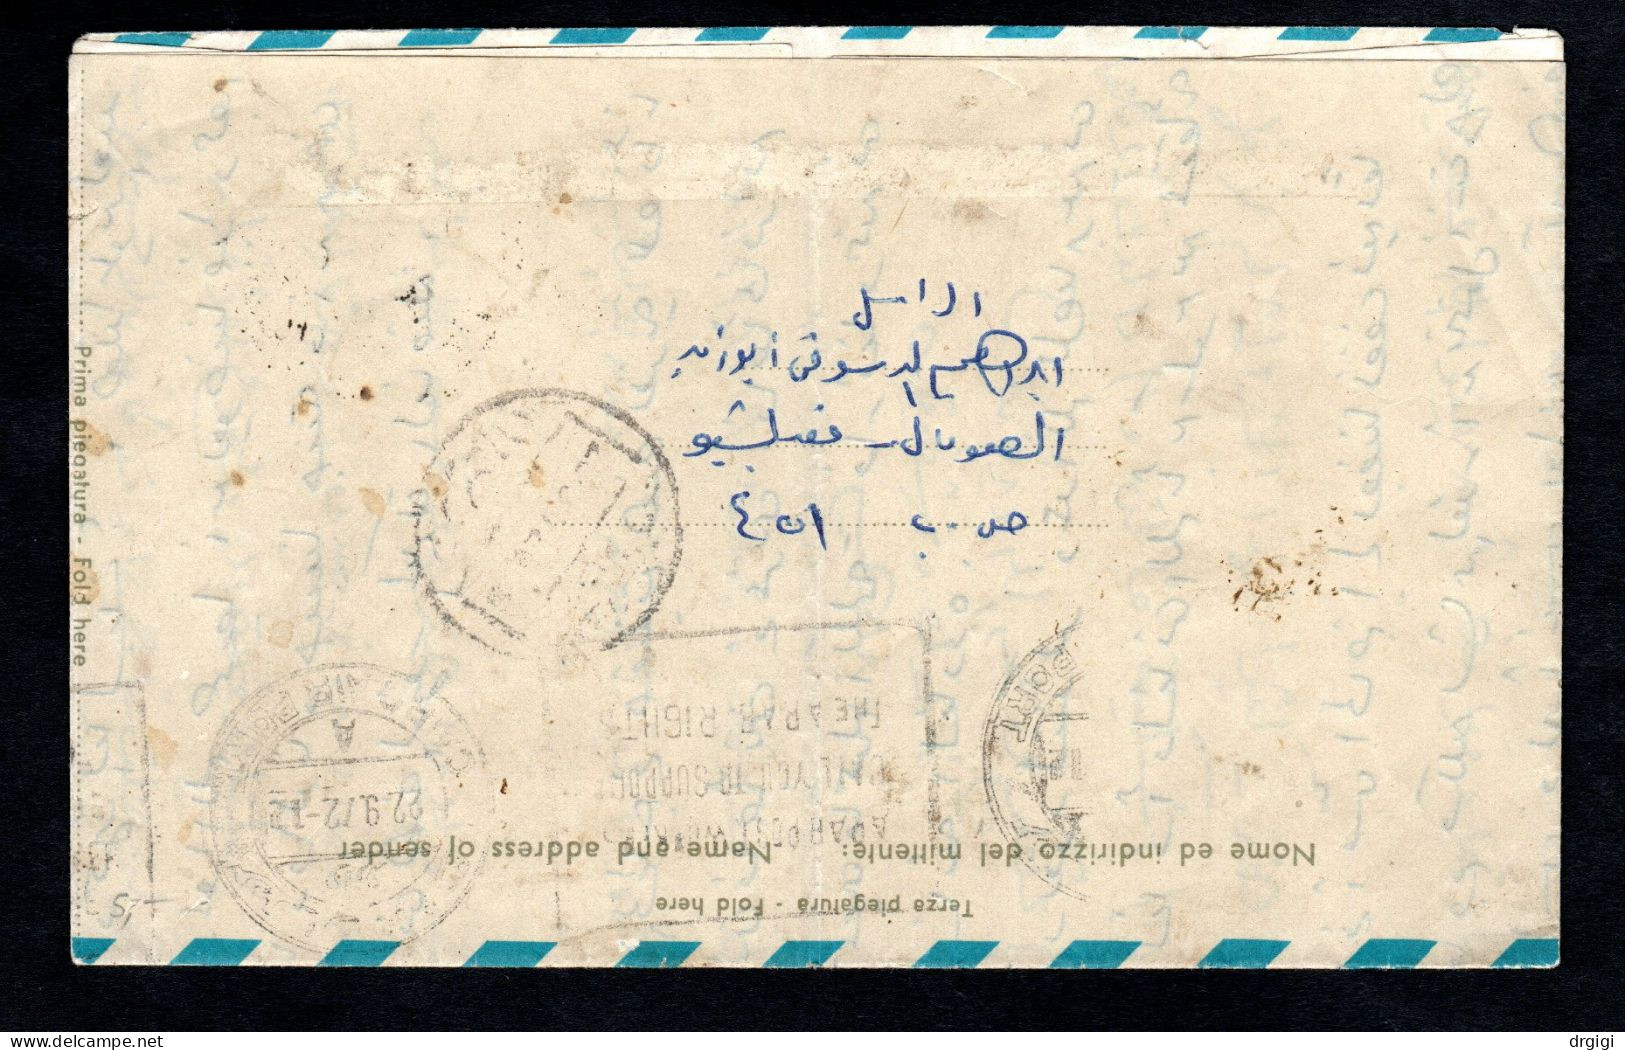 SOMALIA, 1972, INTERO POSTALE A 3 CEI, MOGADISCIO X L'EGITTO, AEROGRAMMA - Somalia (1960-...)